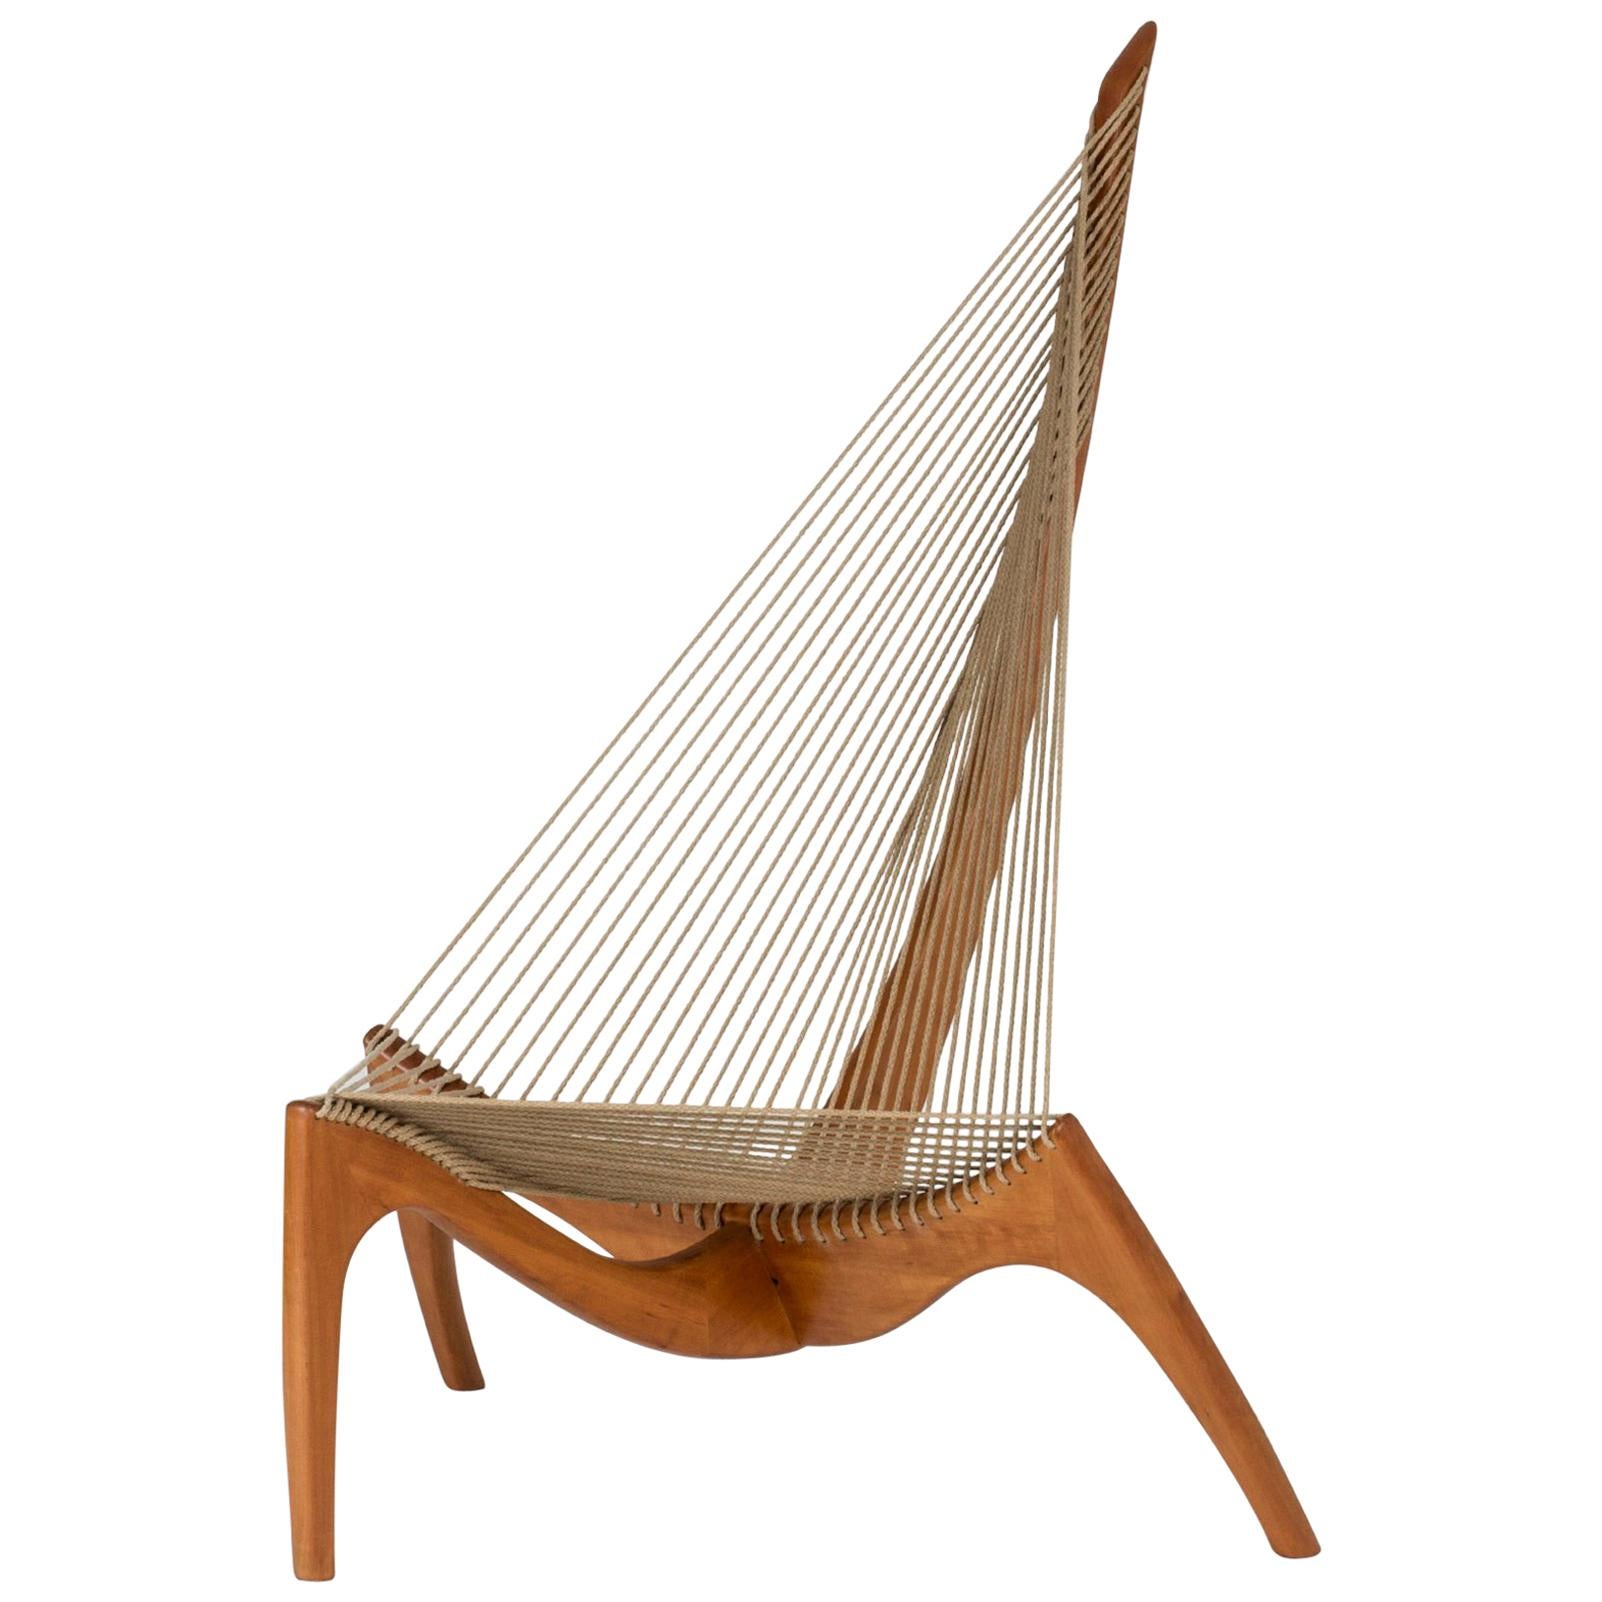 “Harp Chair” by Jørgen Høvelskov